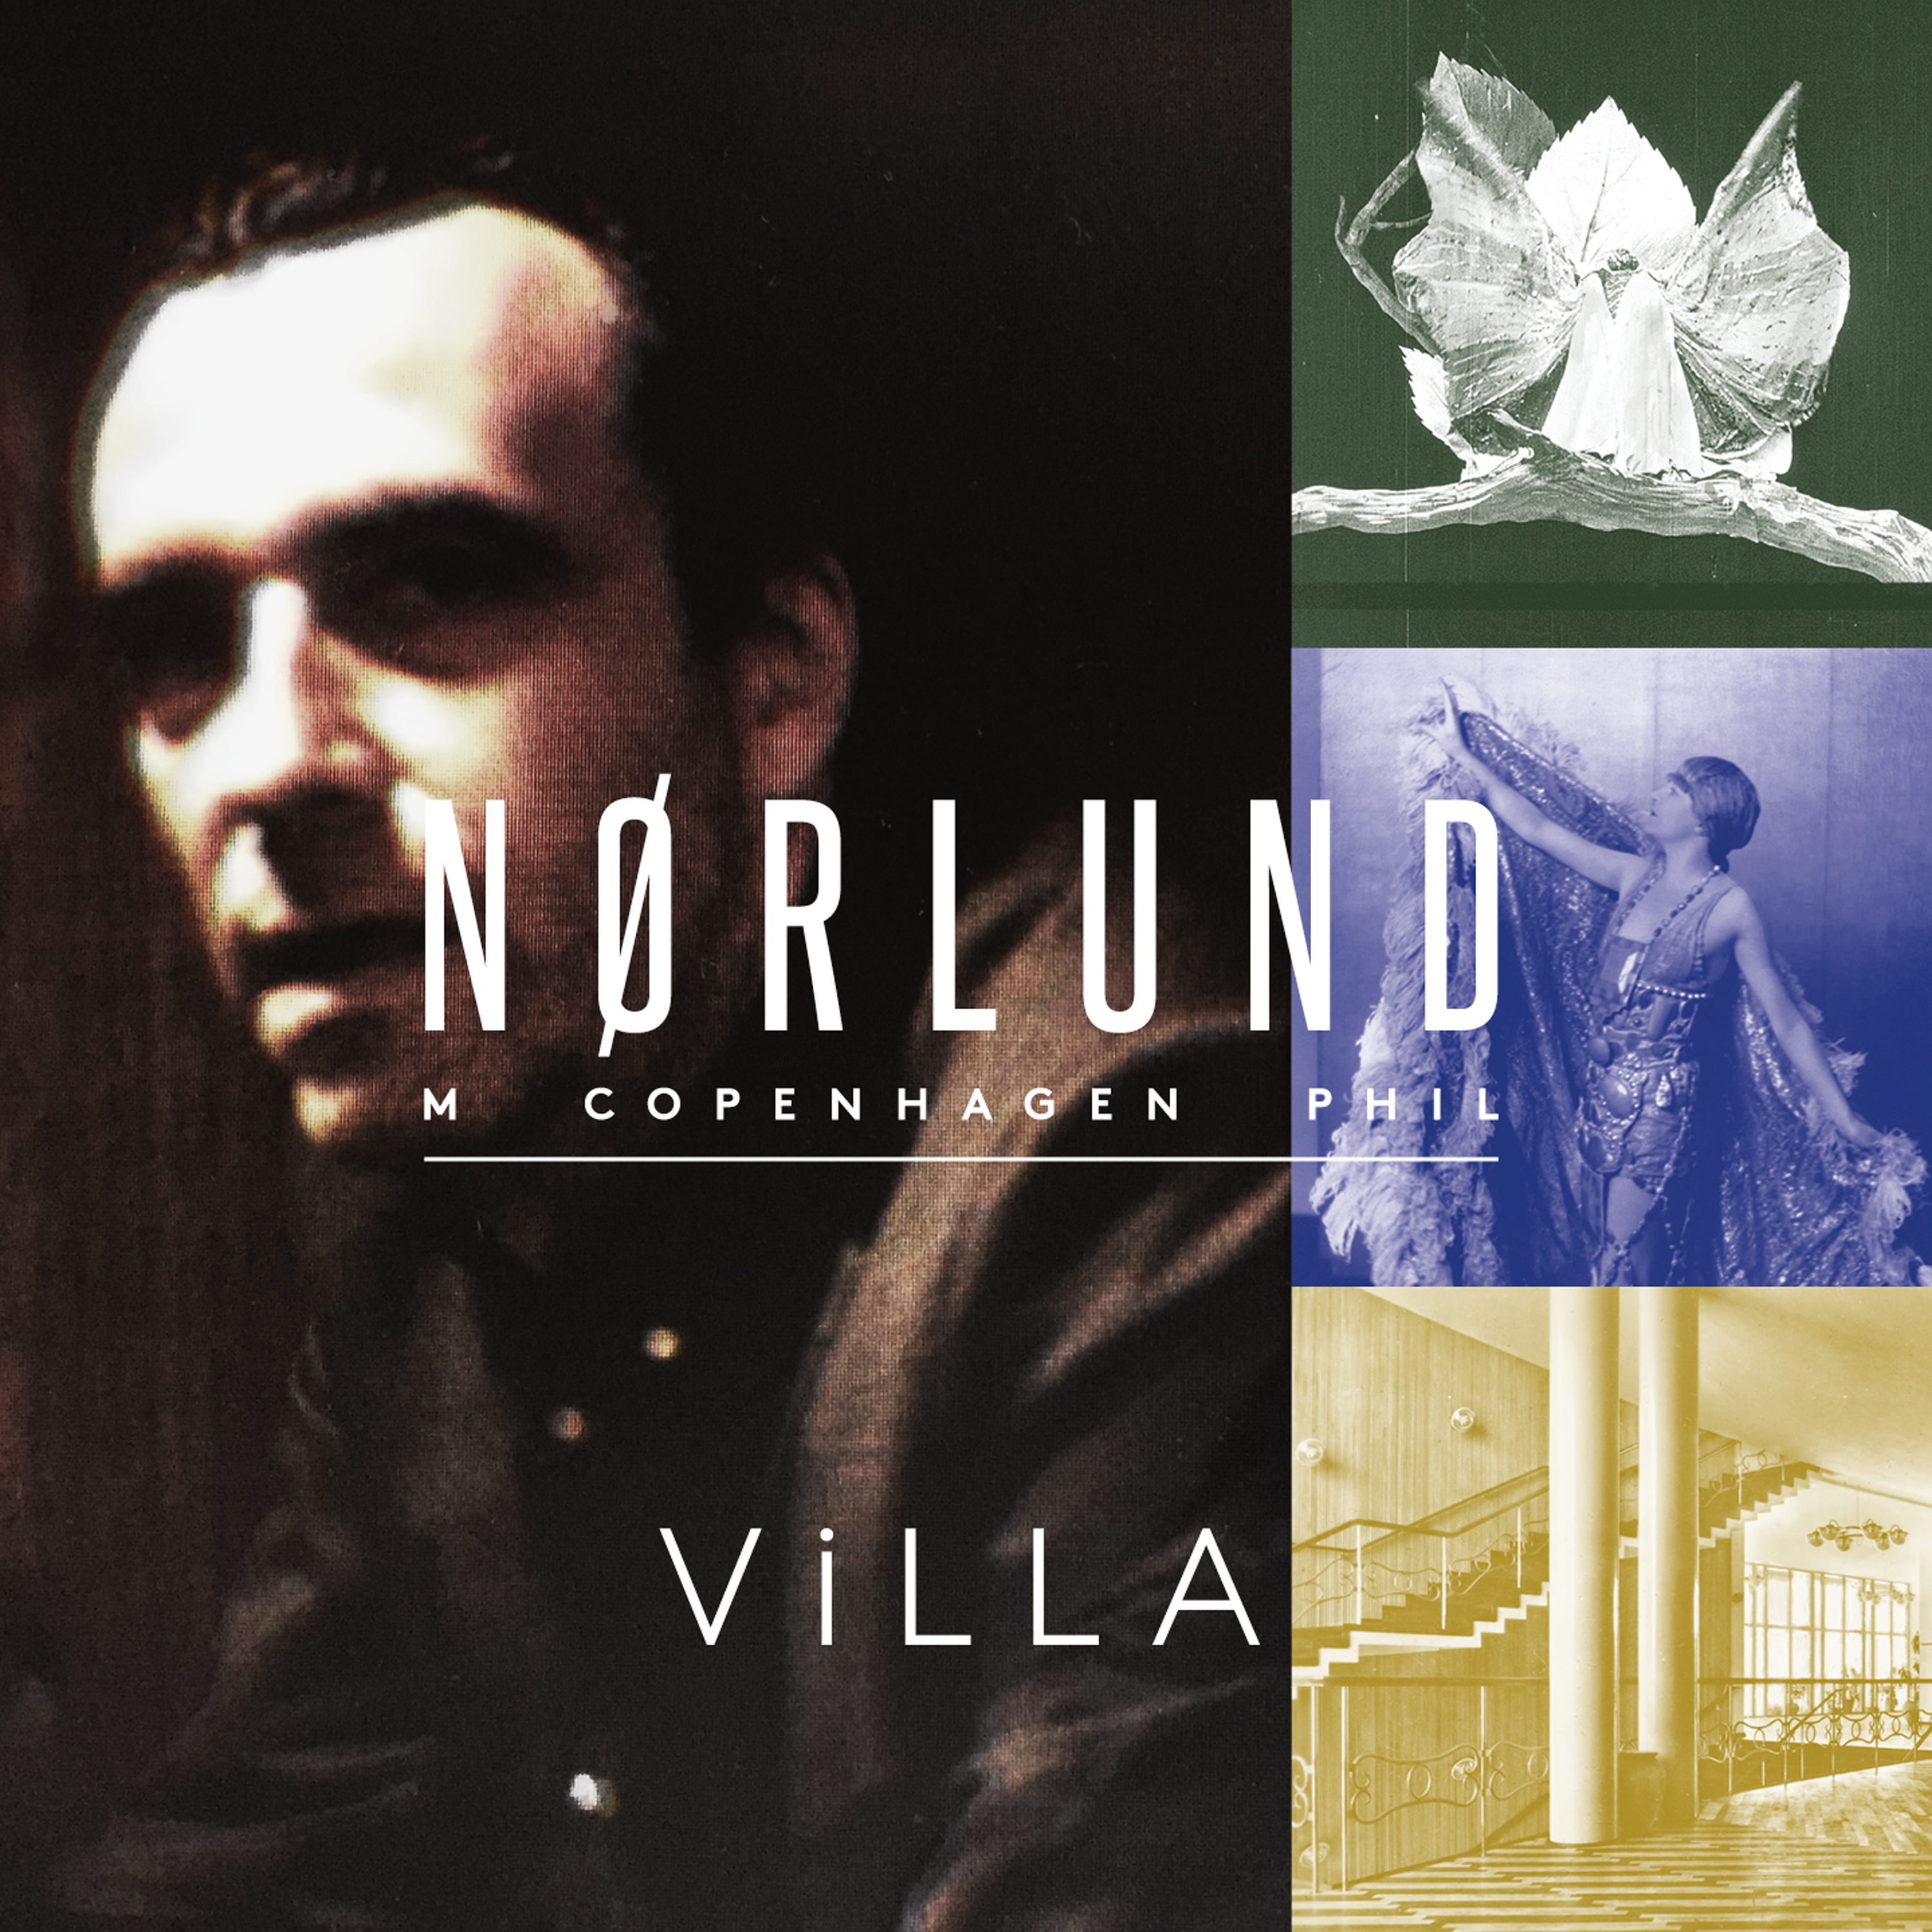 Nikolaj N rlund / Copenhagen Phil - ViLLA